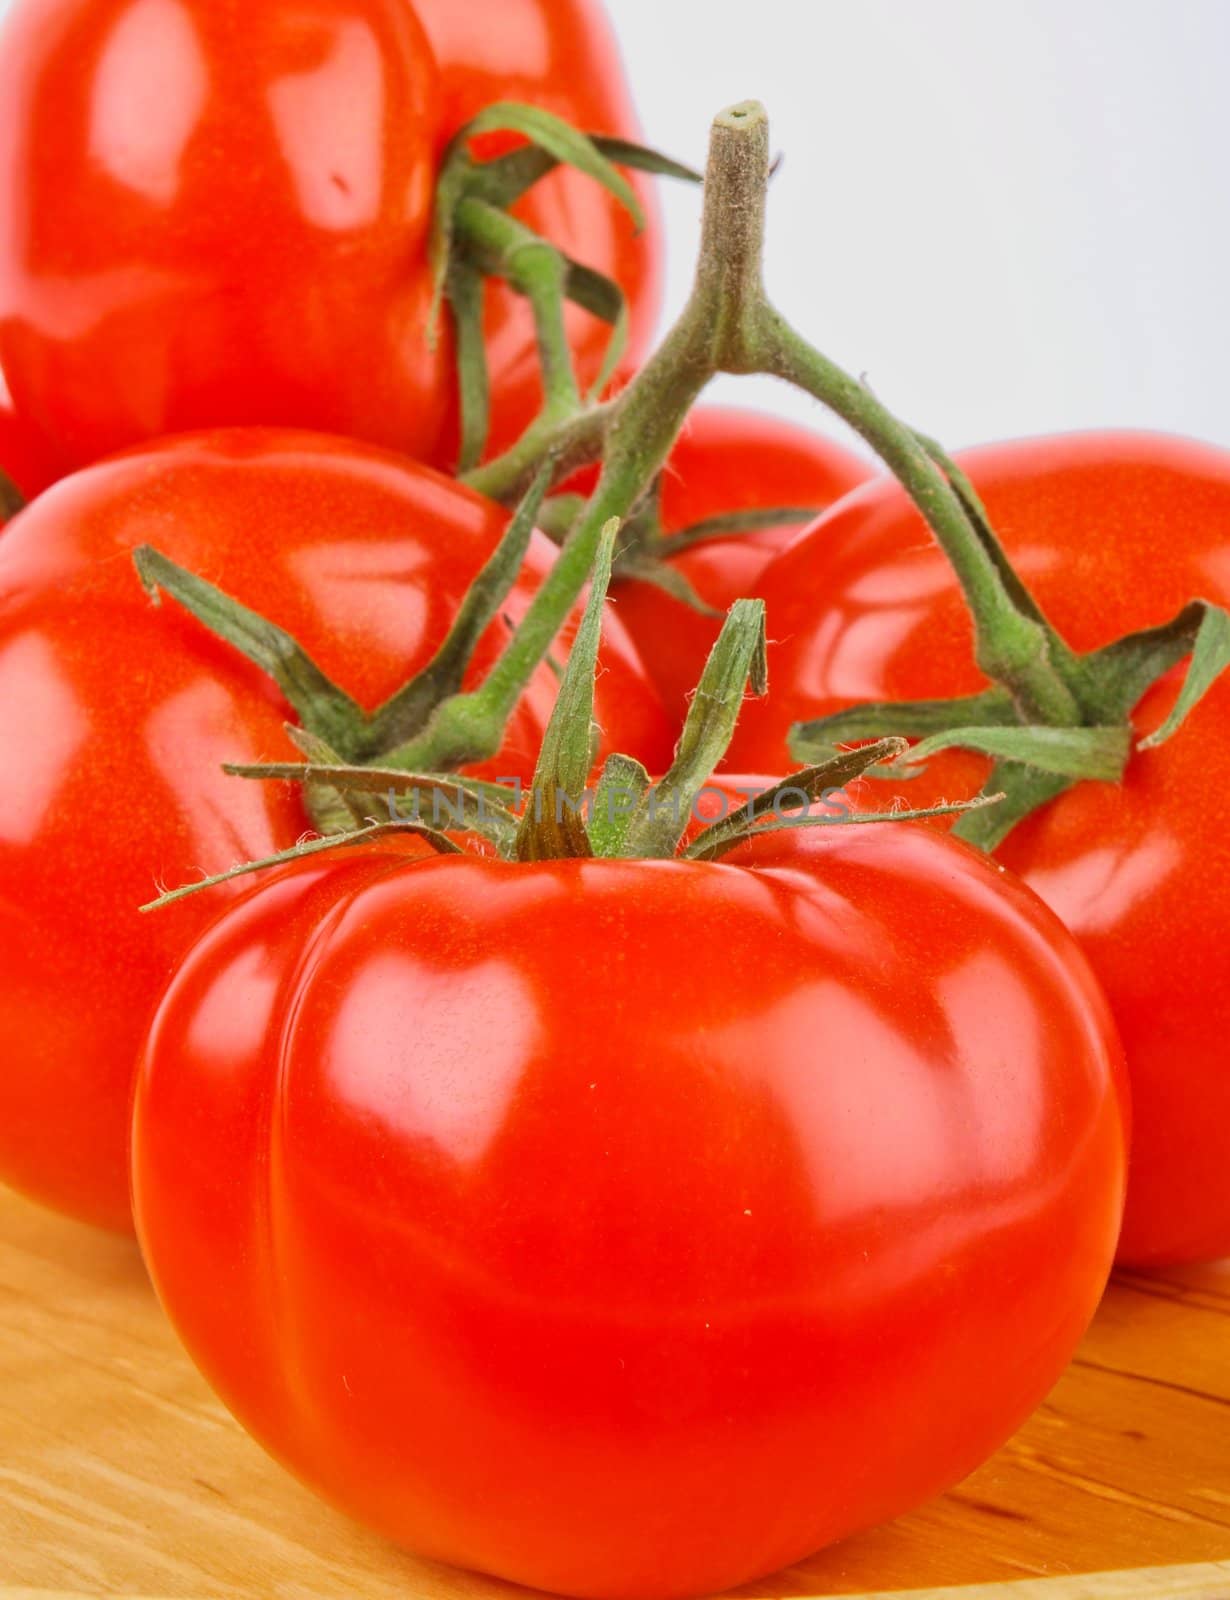 Fresh tomatoes       